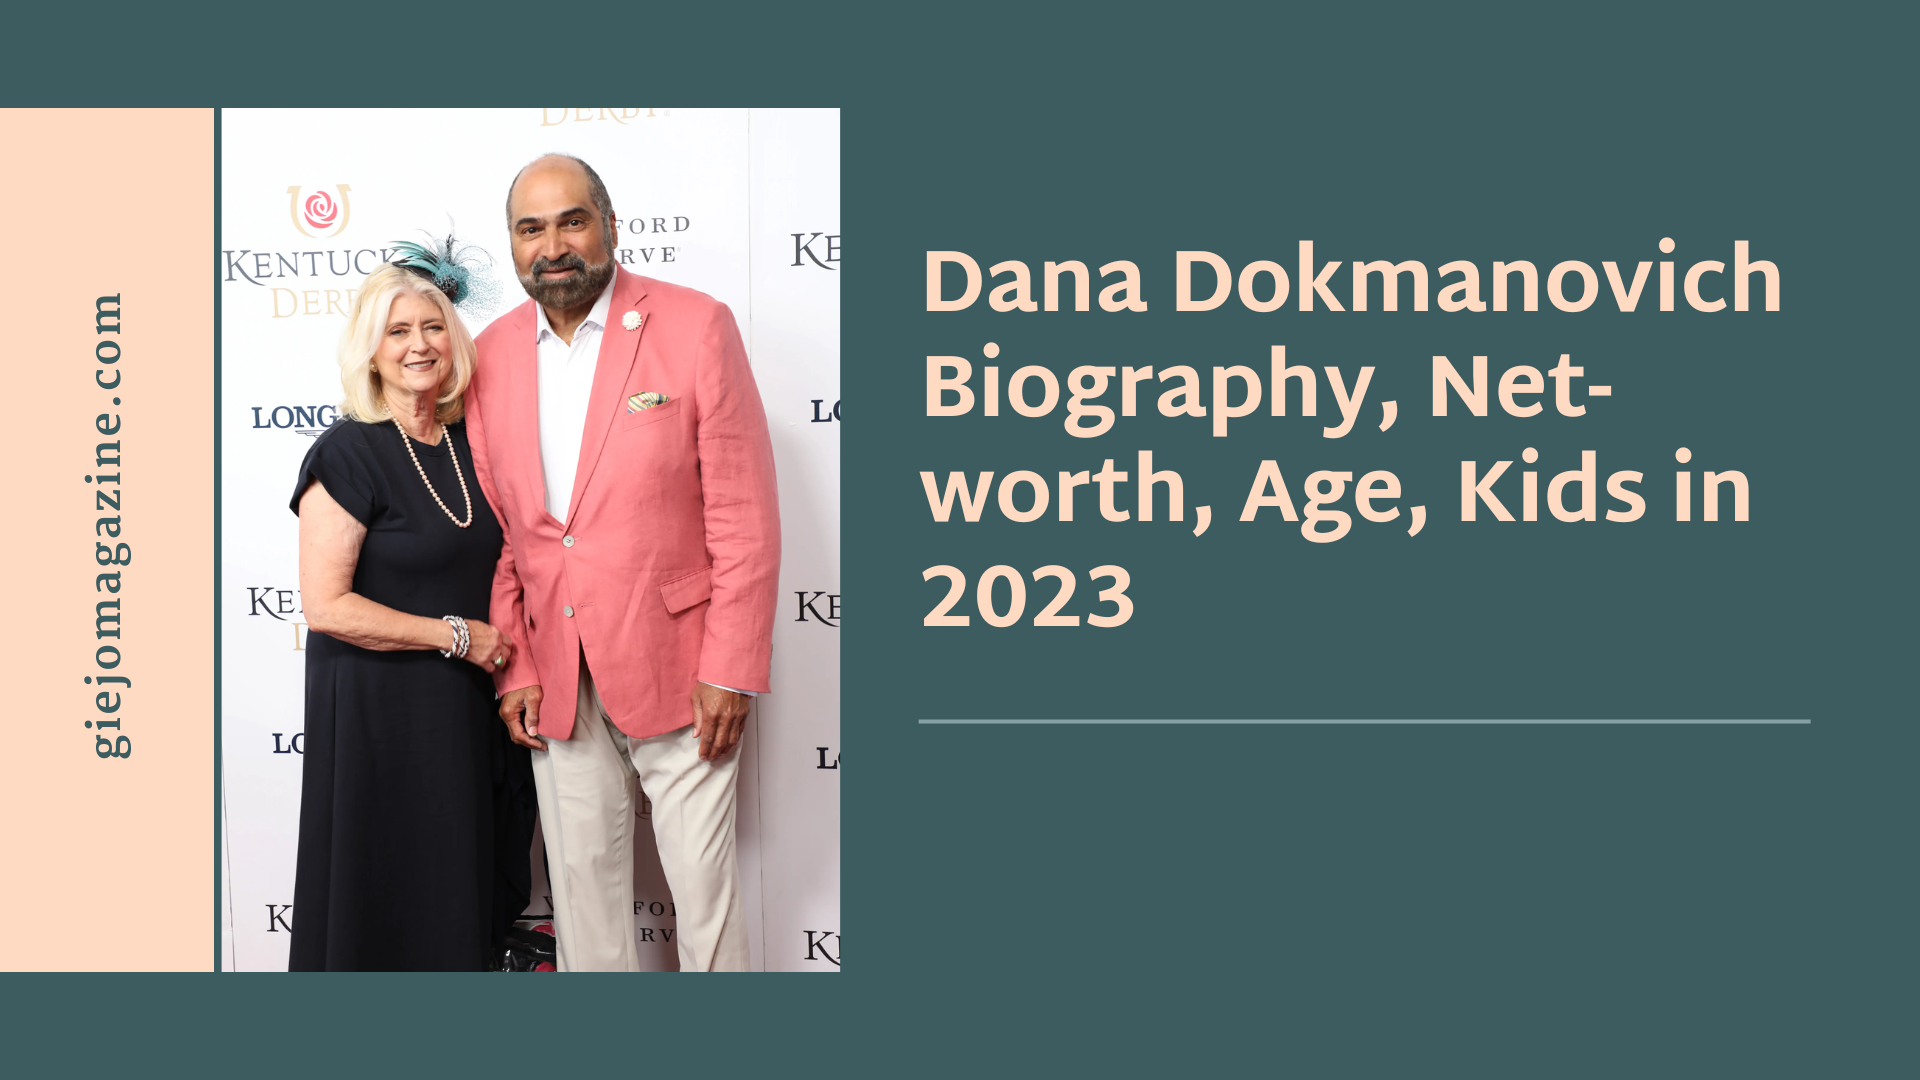 Dana Dokmanovich Biography, Net-worth, Age, Kids in 2023